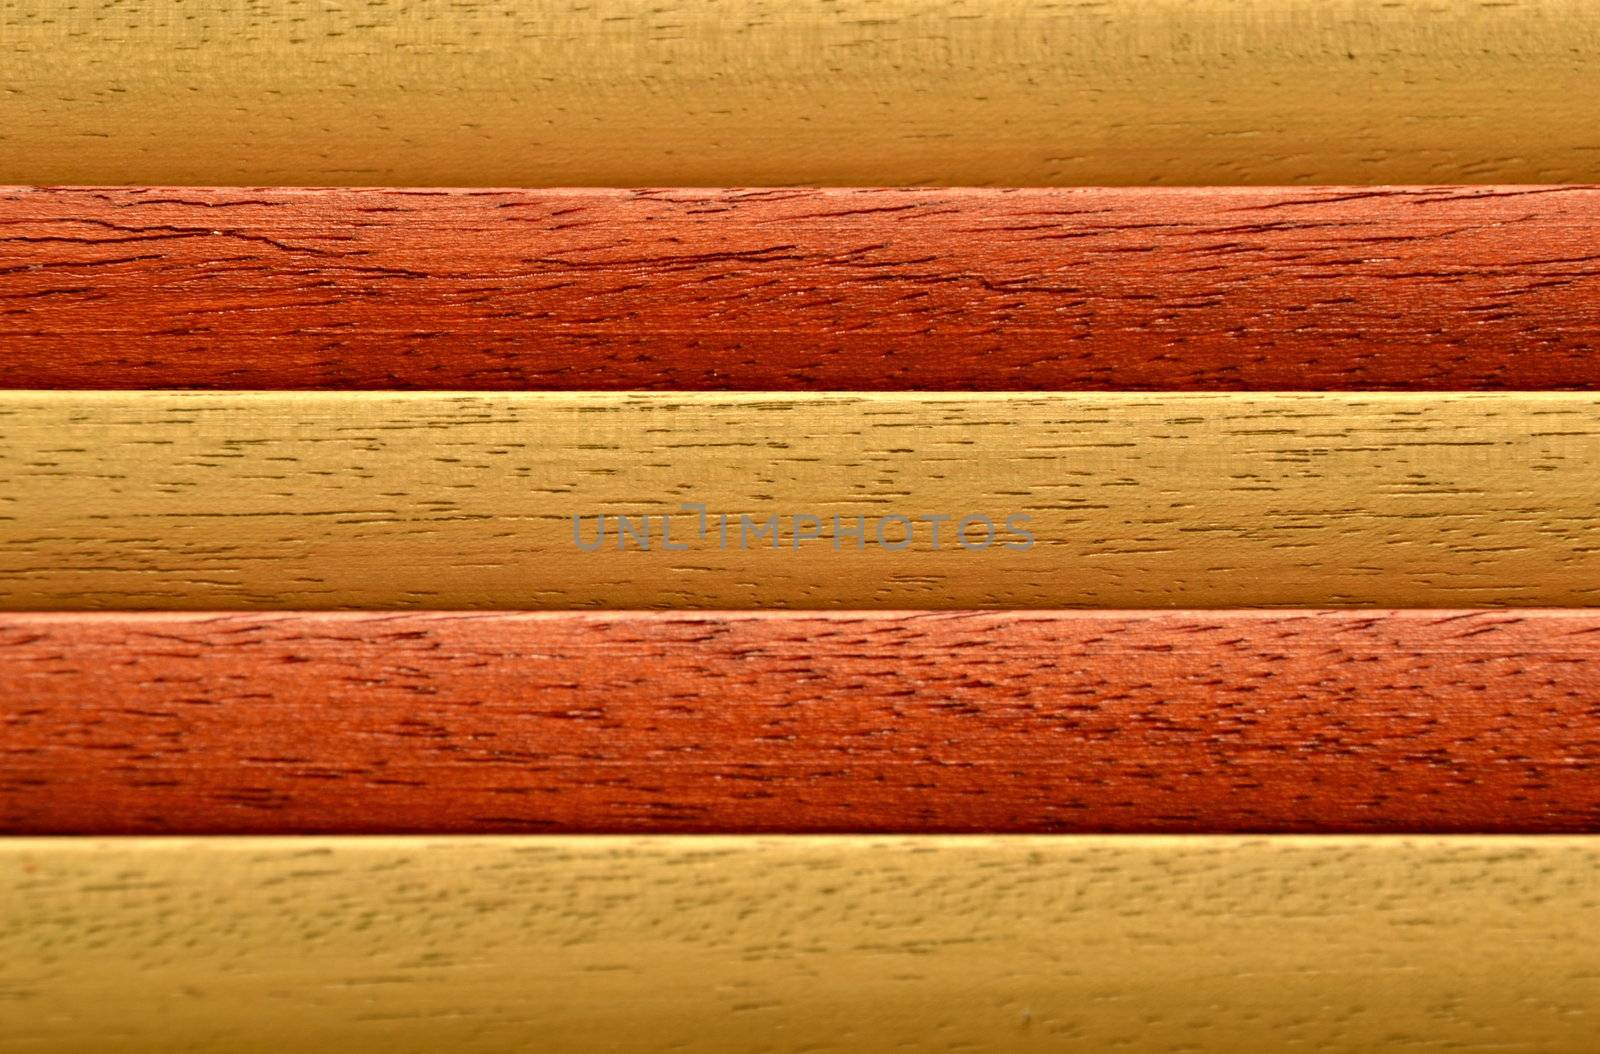 background with laths of hardwood orange and reddish brown